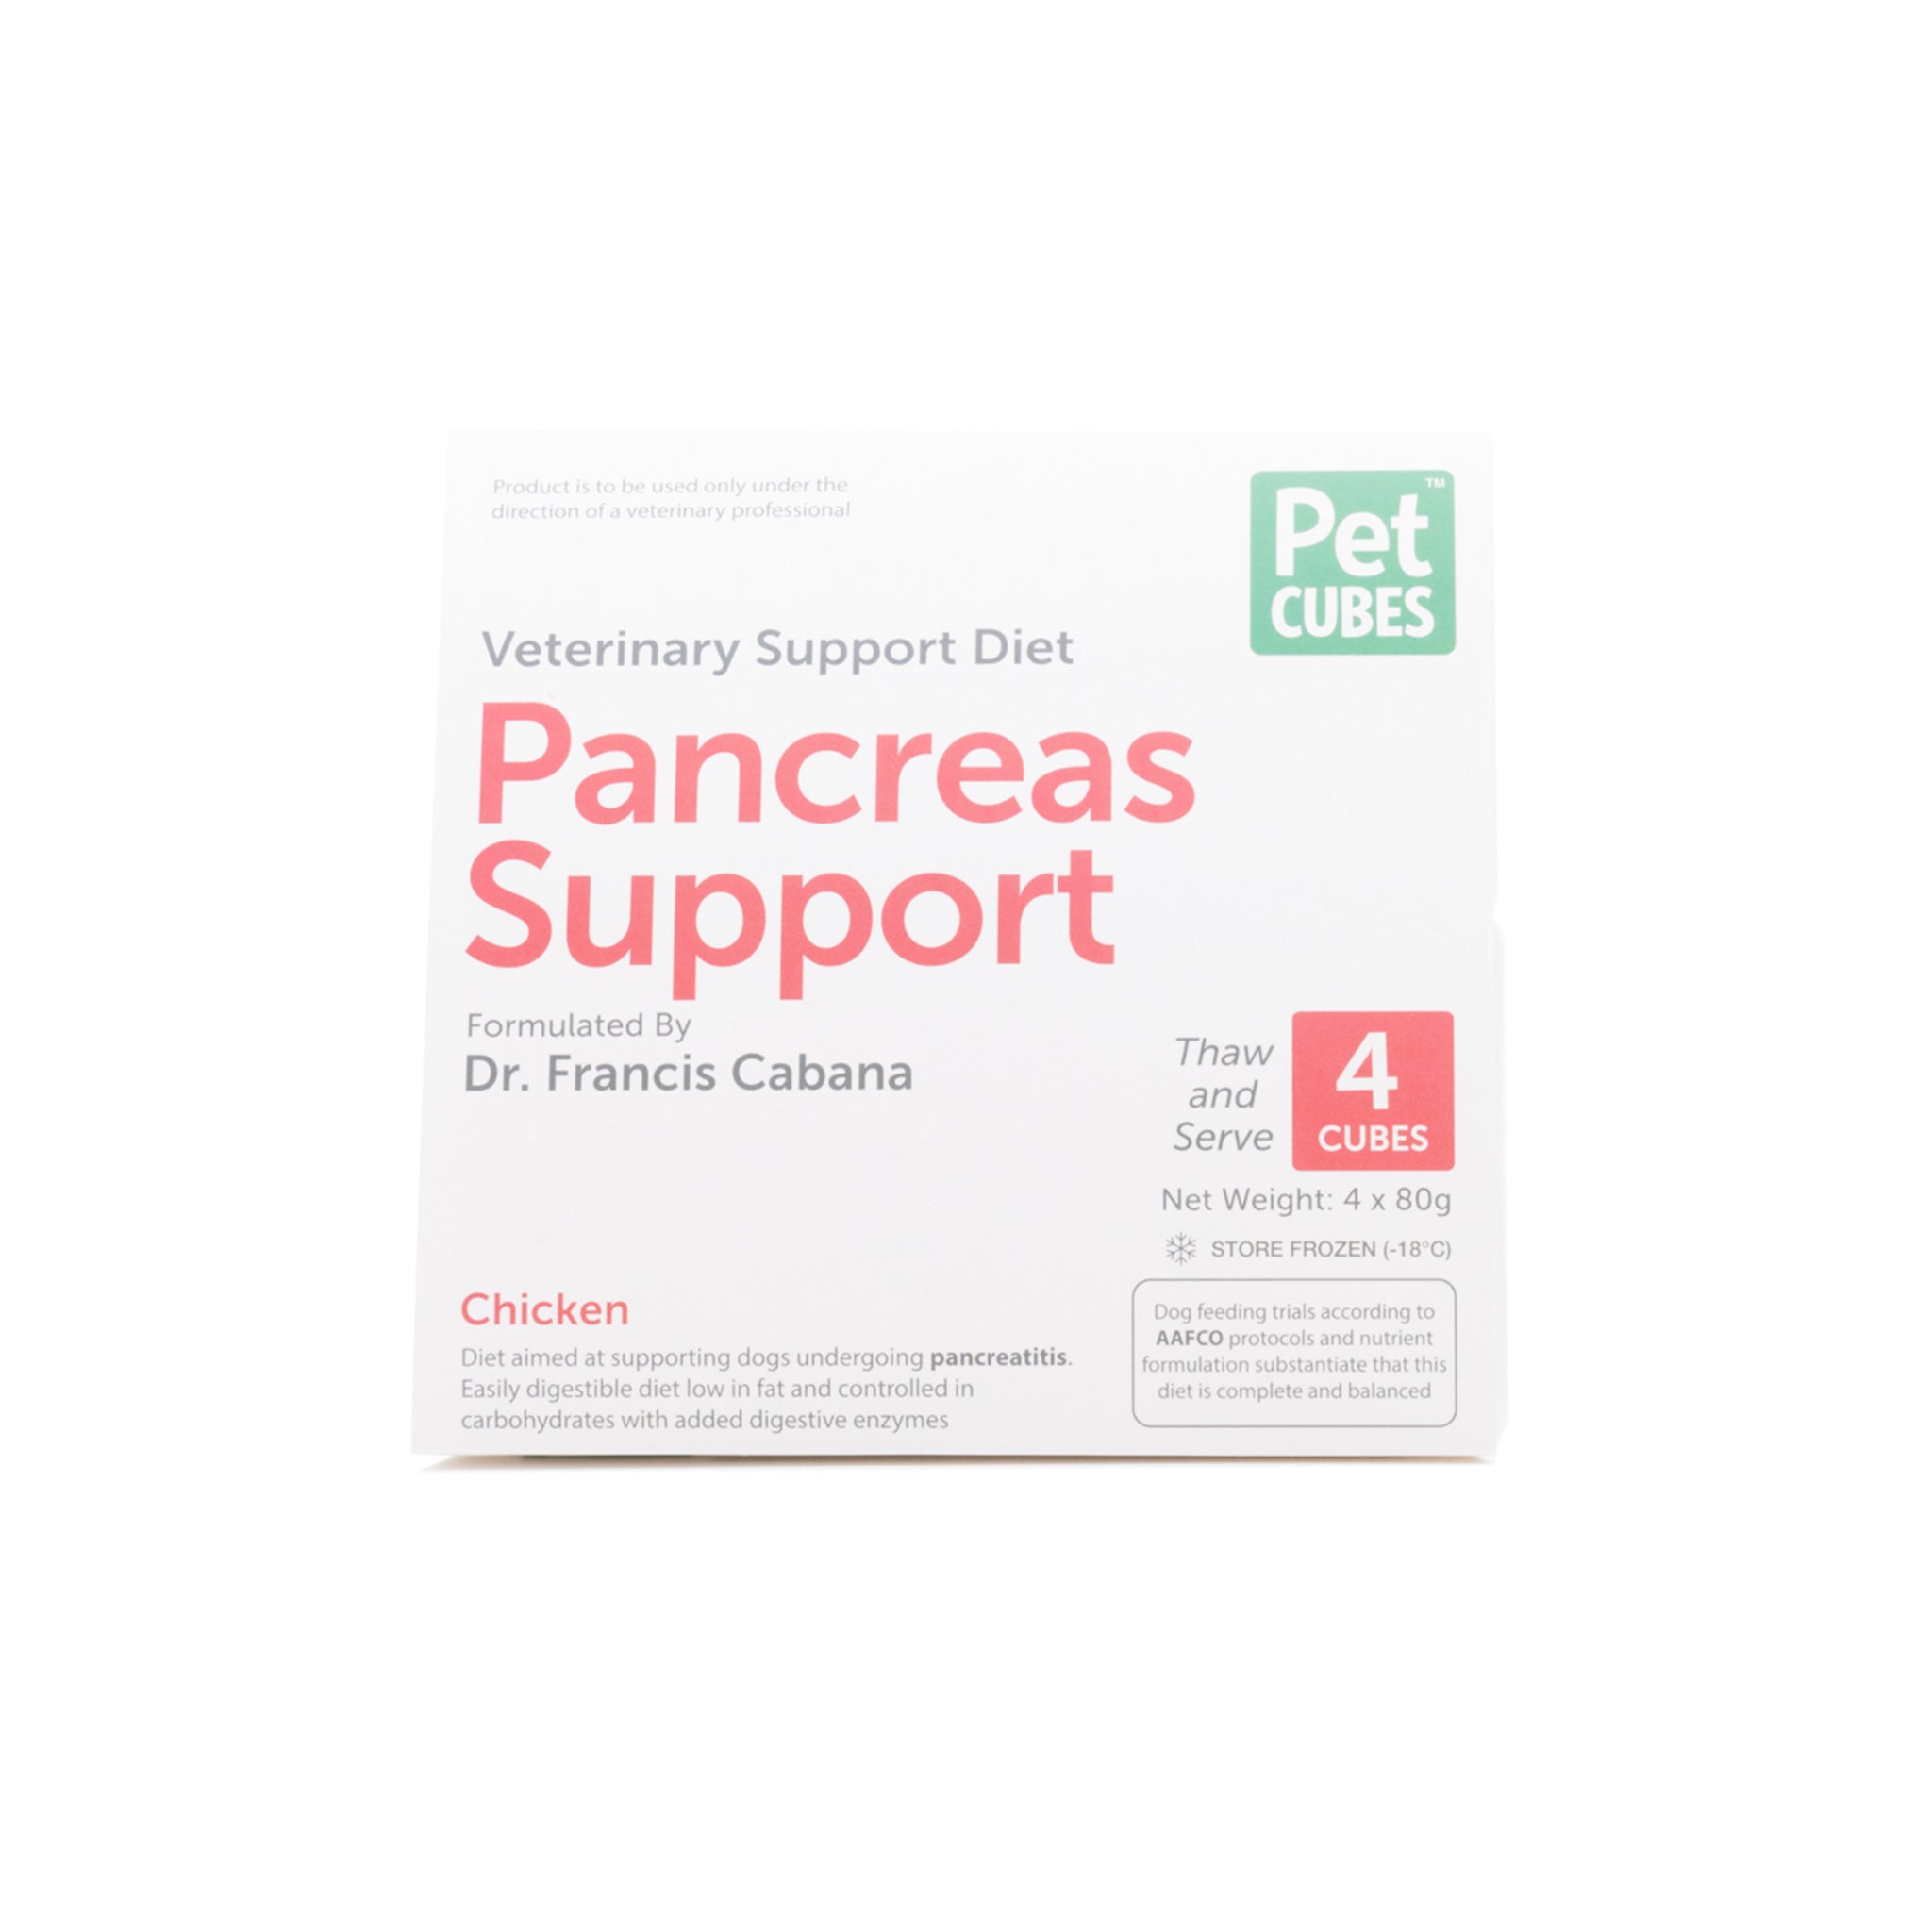 PETCUBES Veterinary Support Range - Pancreas Support Diet 320g